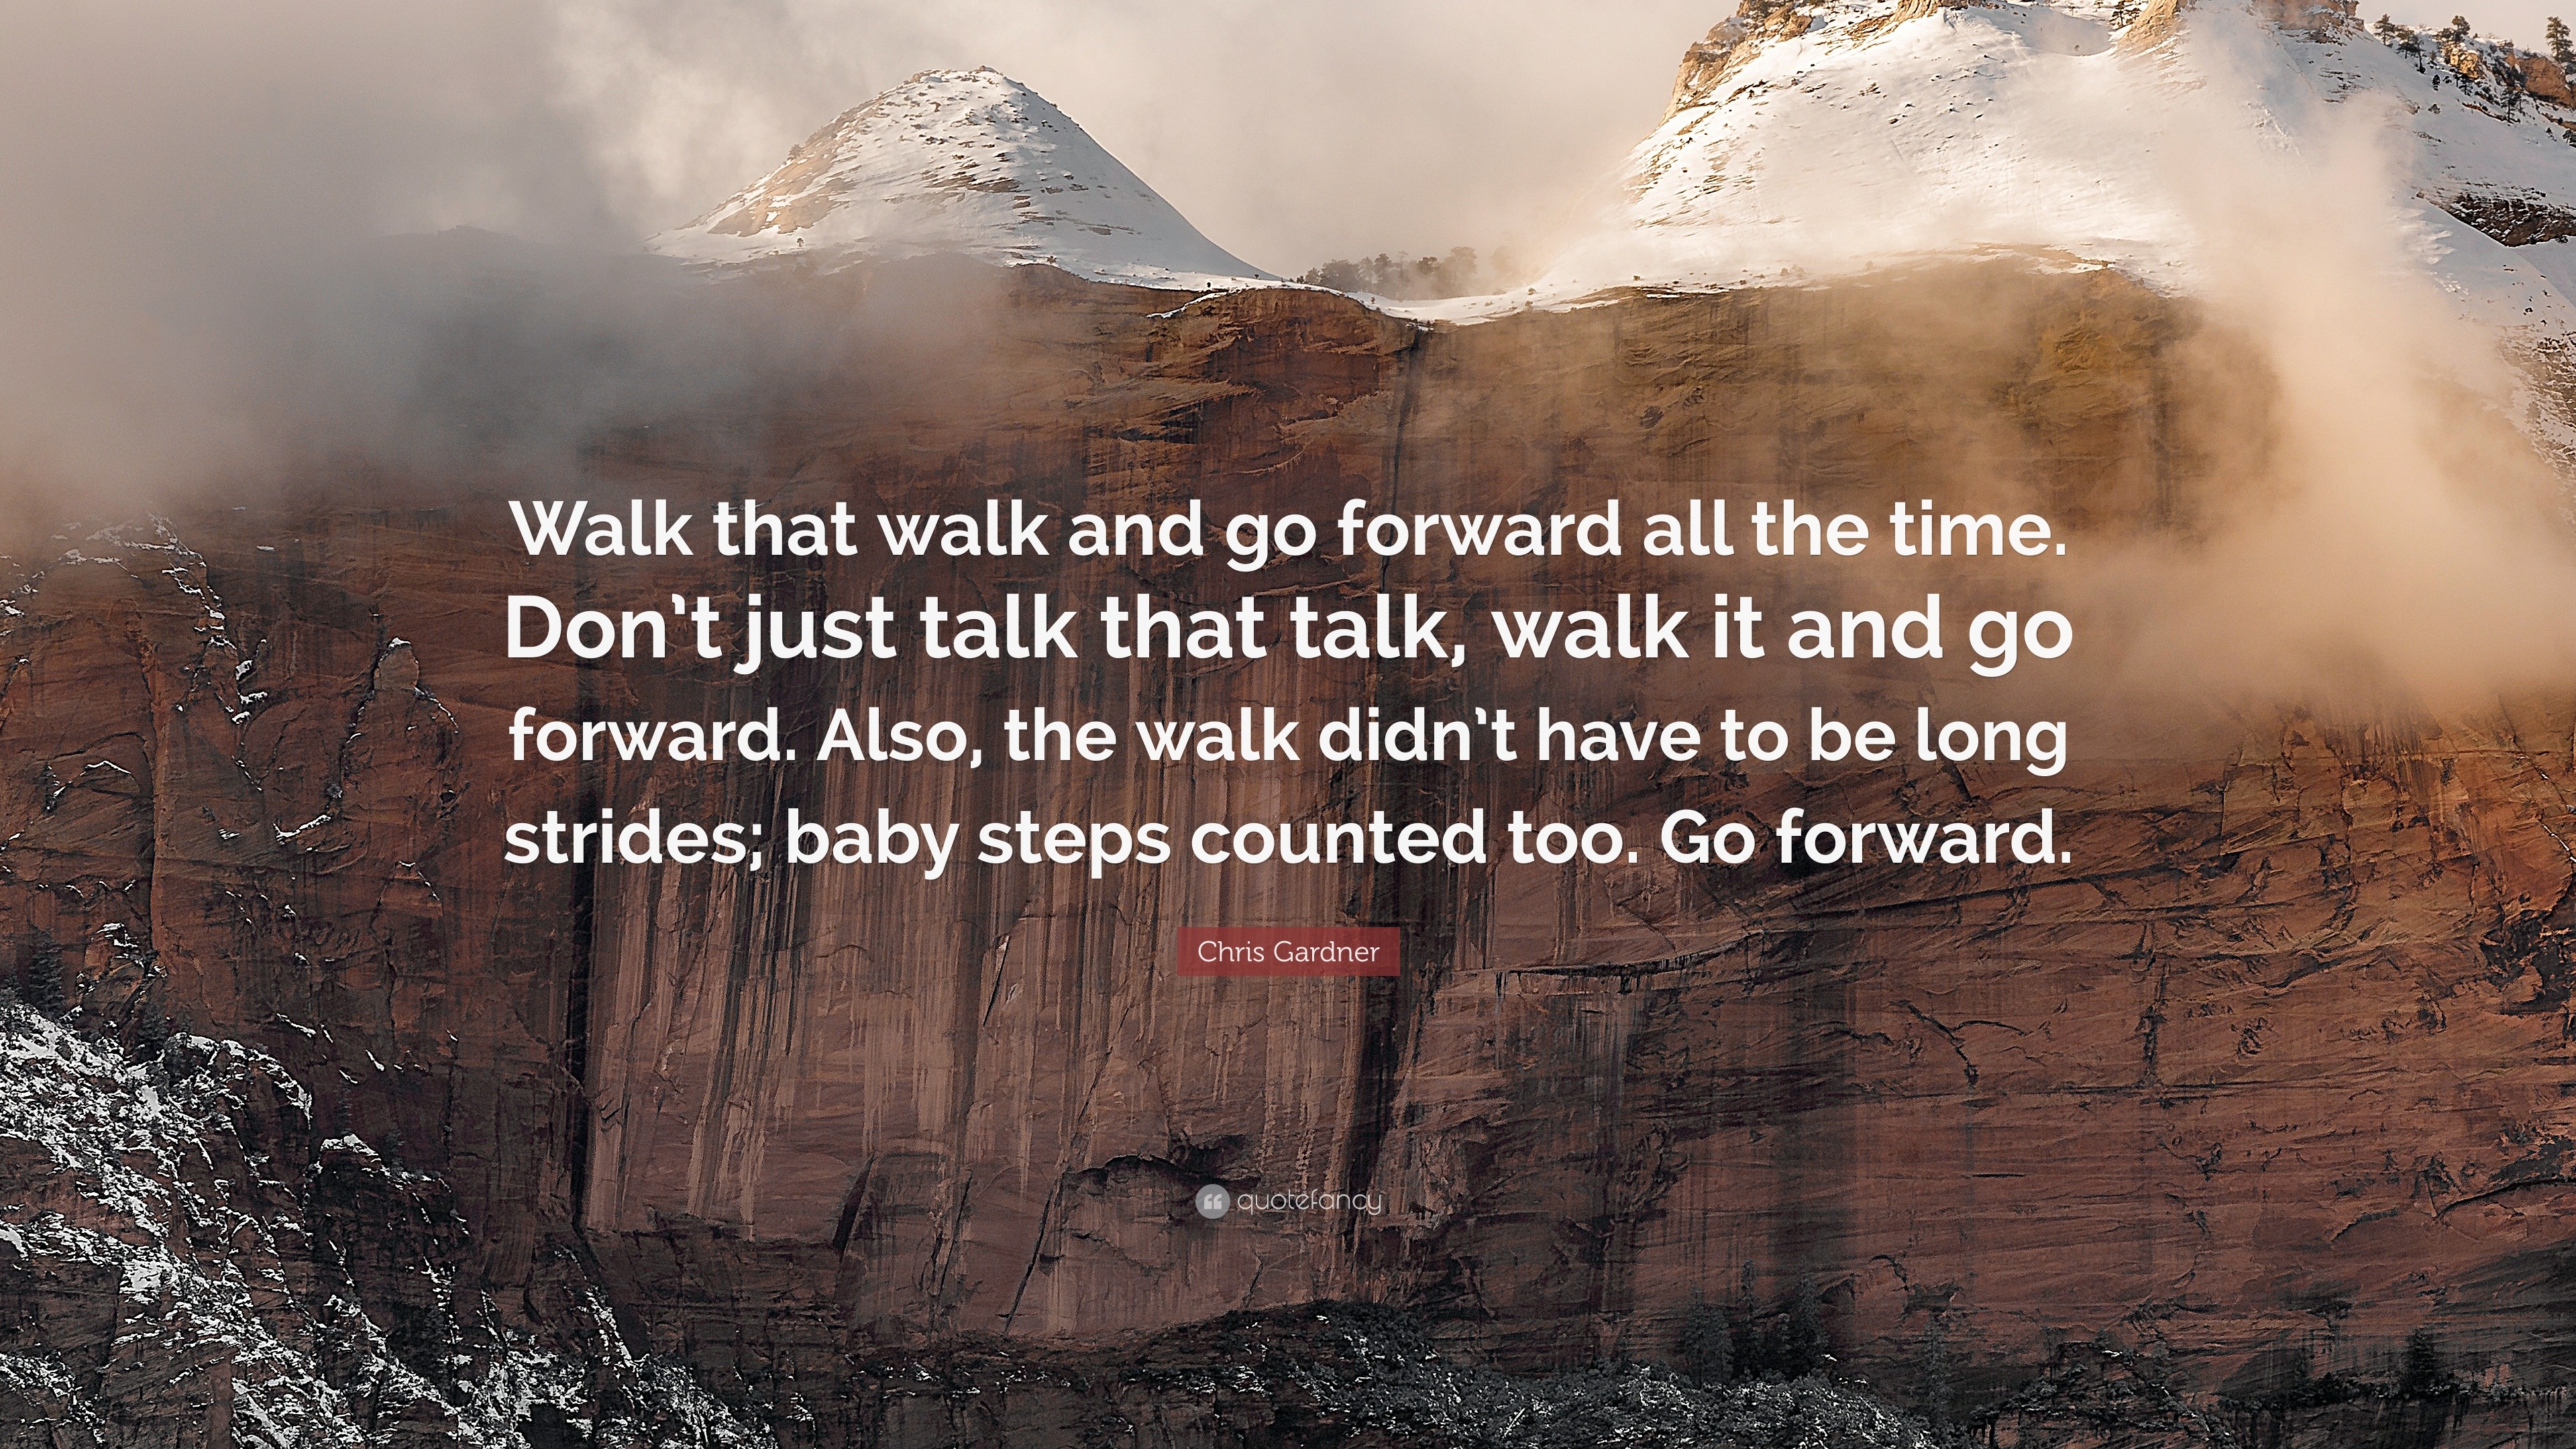 Array Evolve Rettsmedicin Chris Gardner Quote: “Walk that walk and go forward all the time. Don't  just talk that talk, walk it and go forward. Also, the walk didn't hav...”